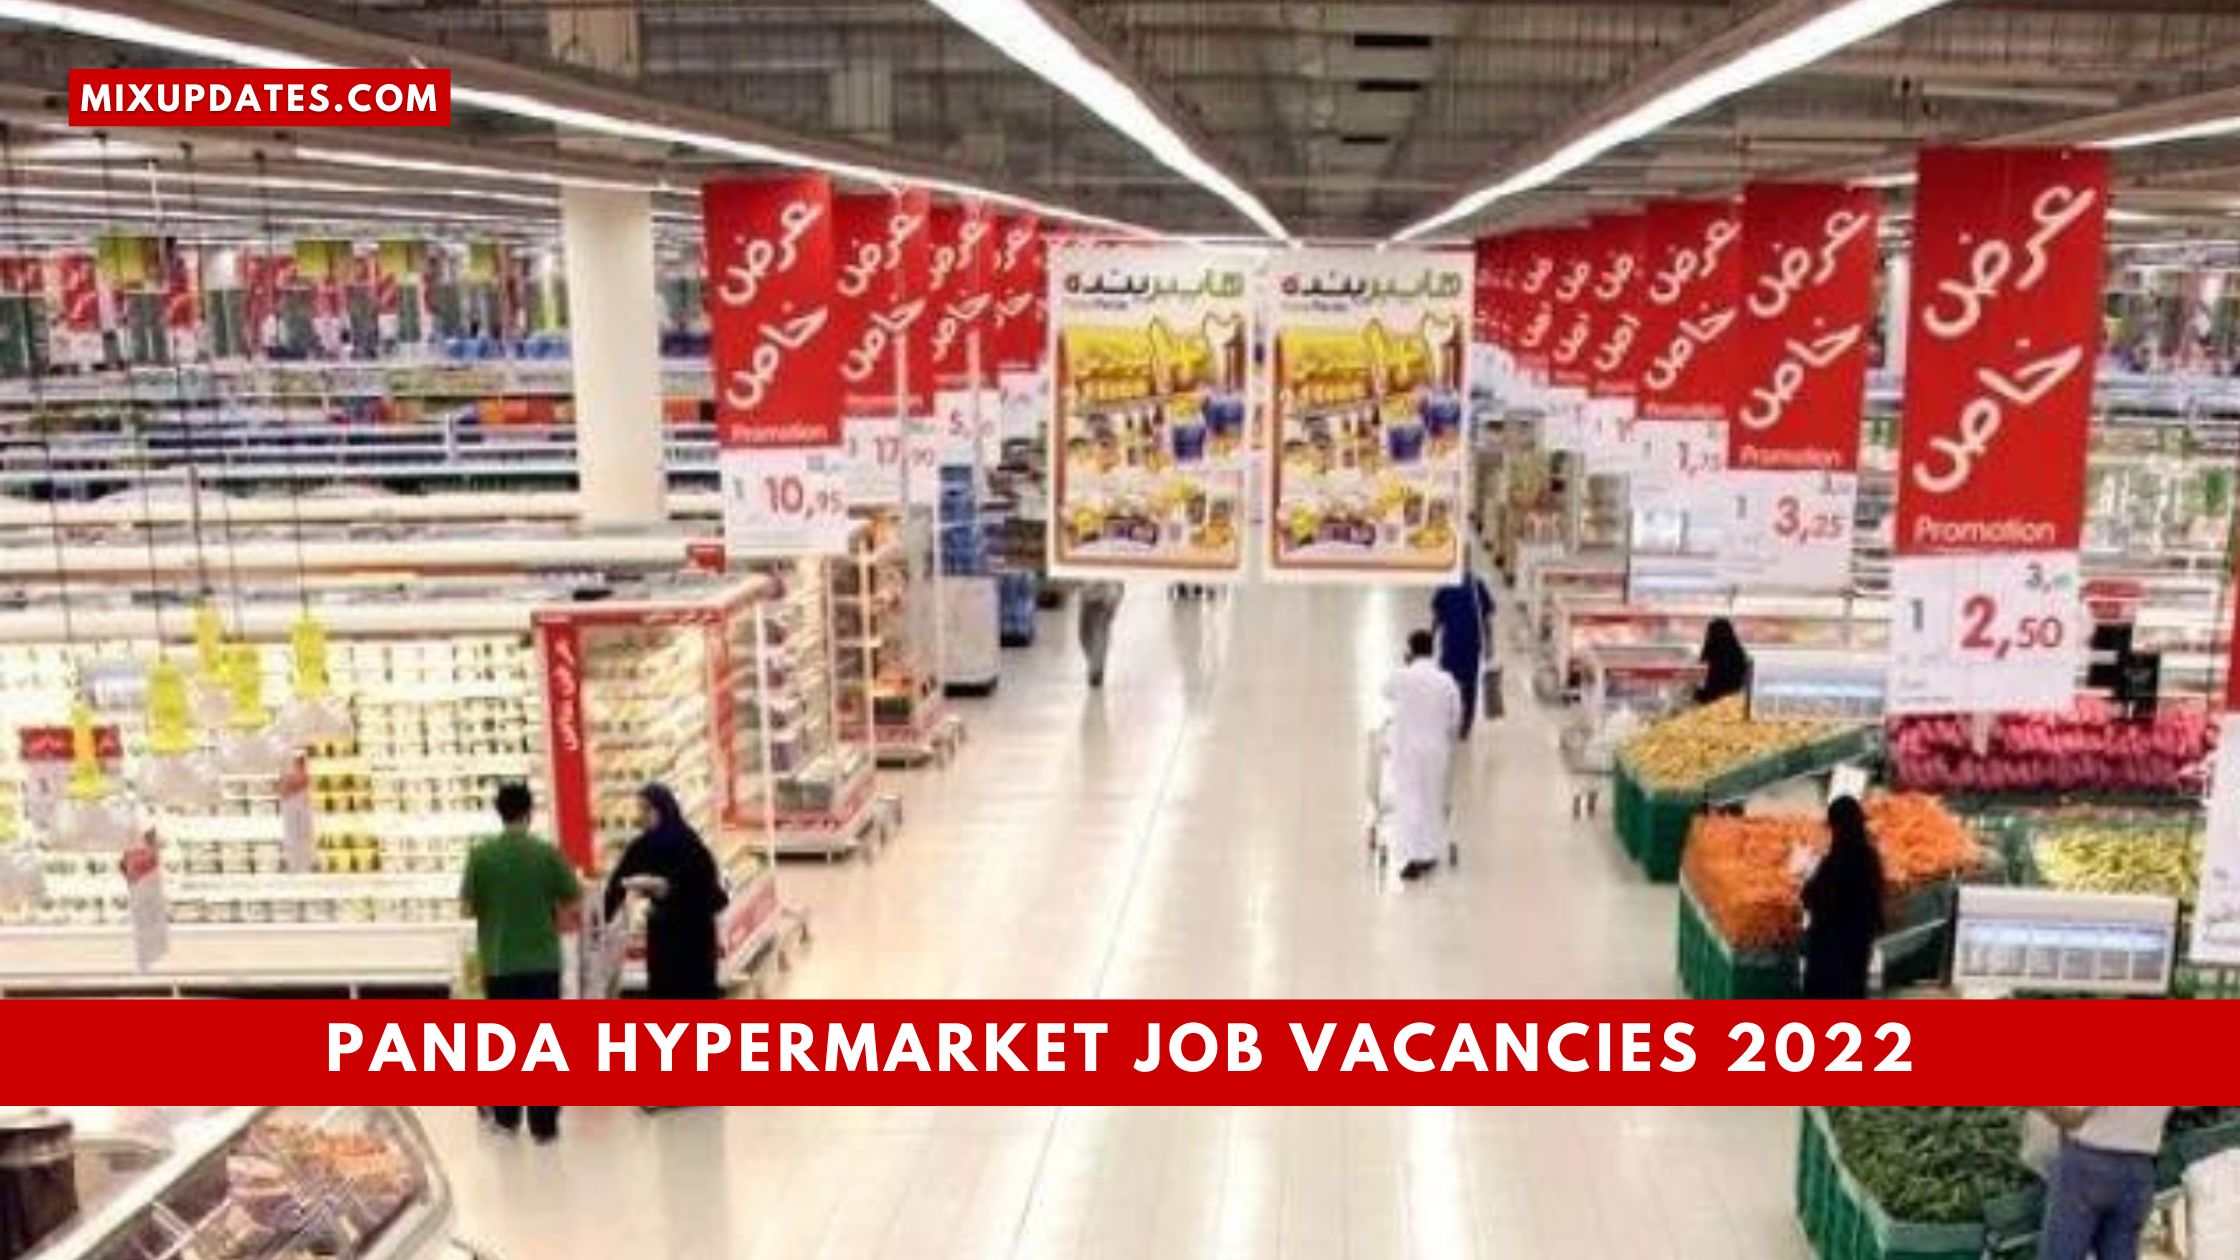 Panda Hypermarket Job Vacancies 2022